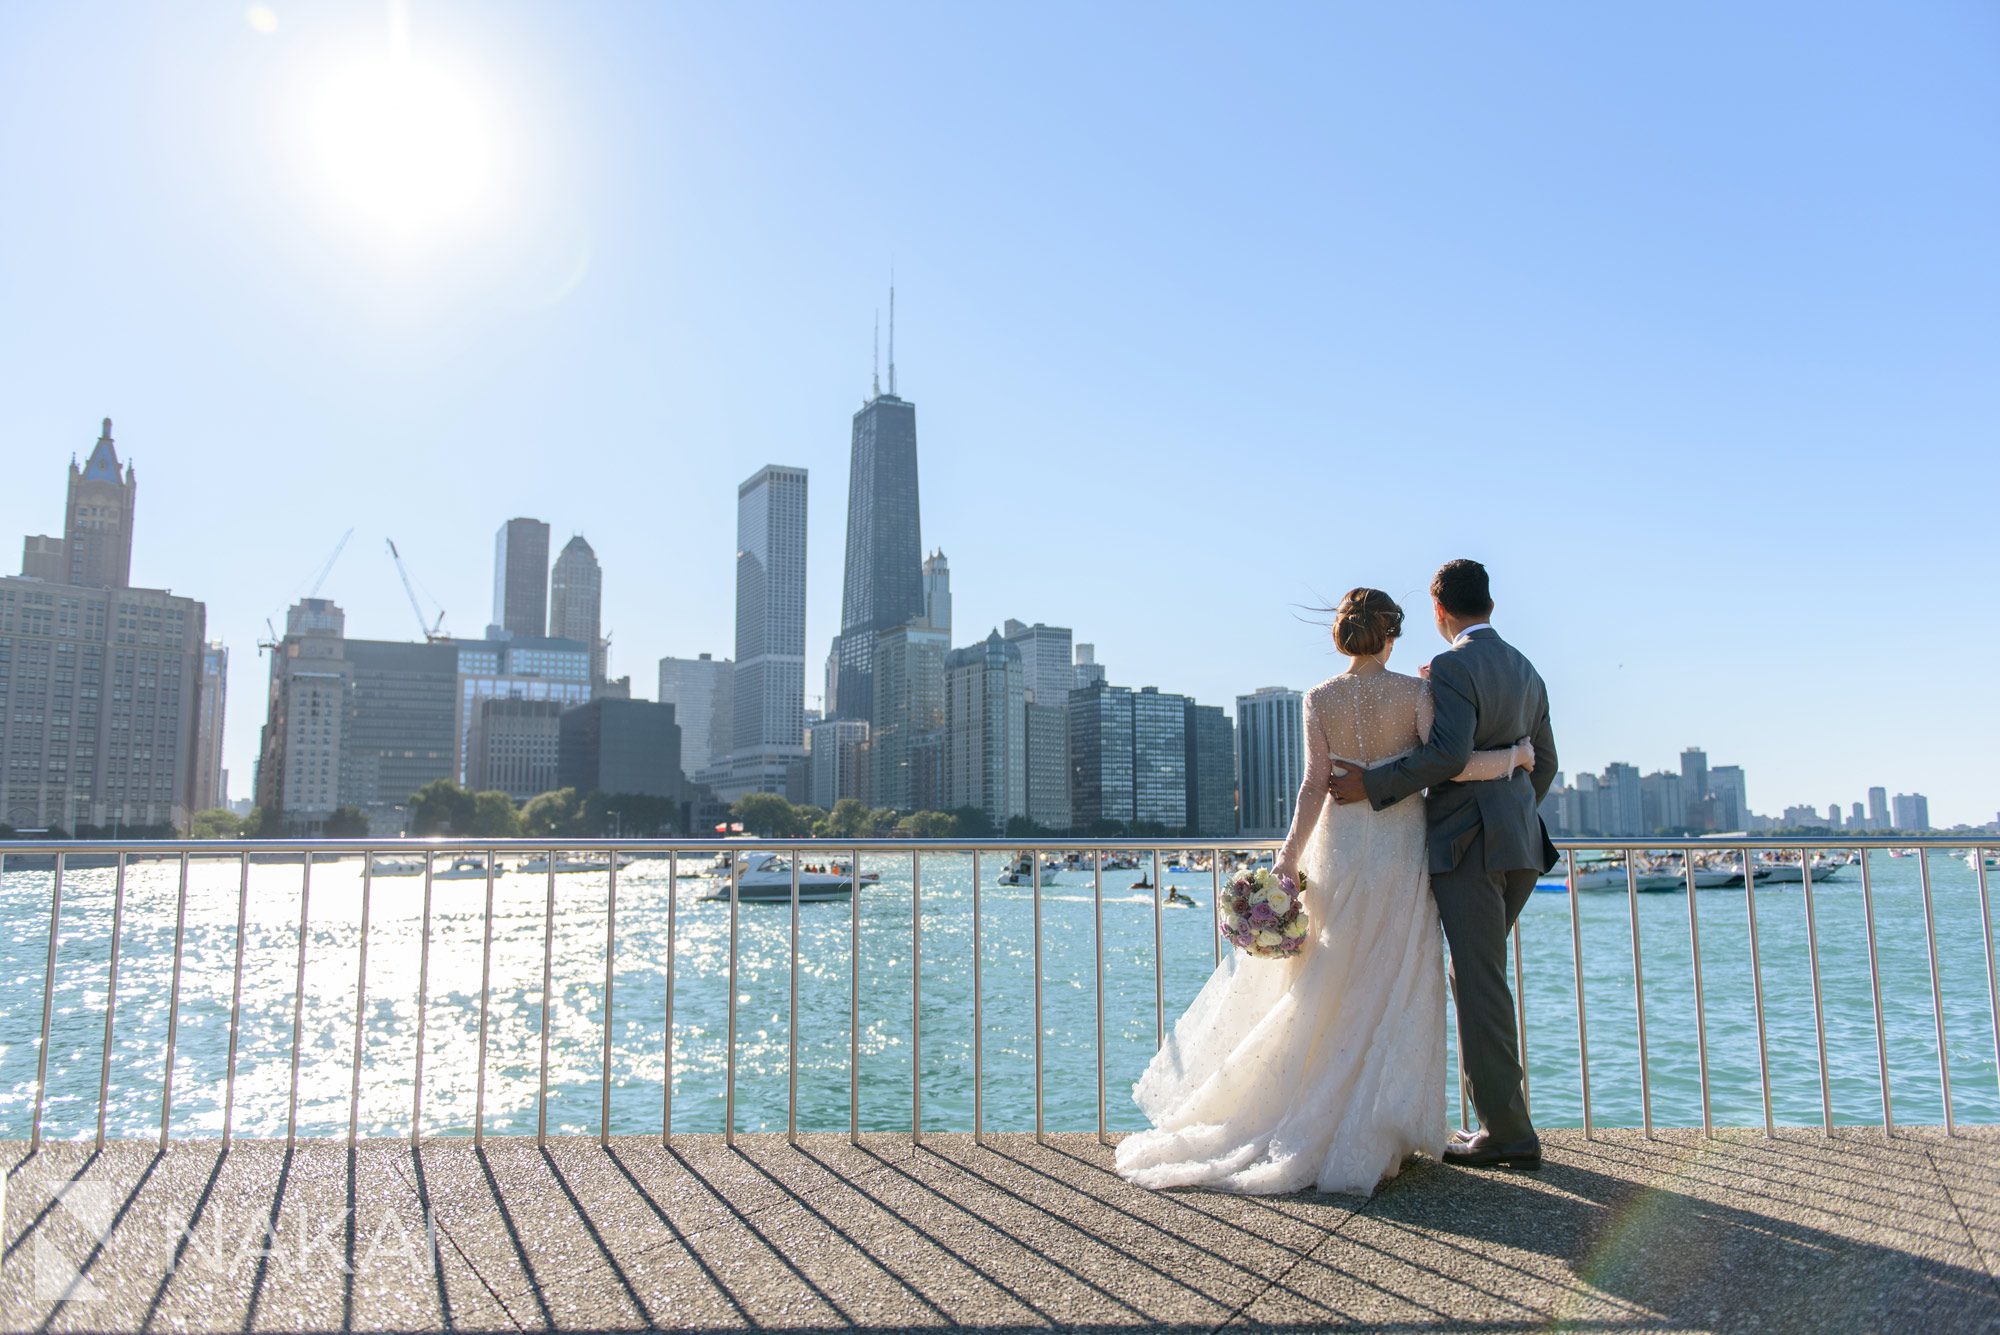 olive park wedding pictures Chicago skyline